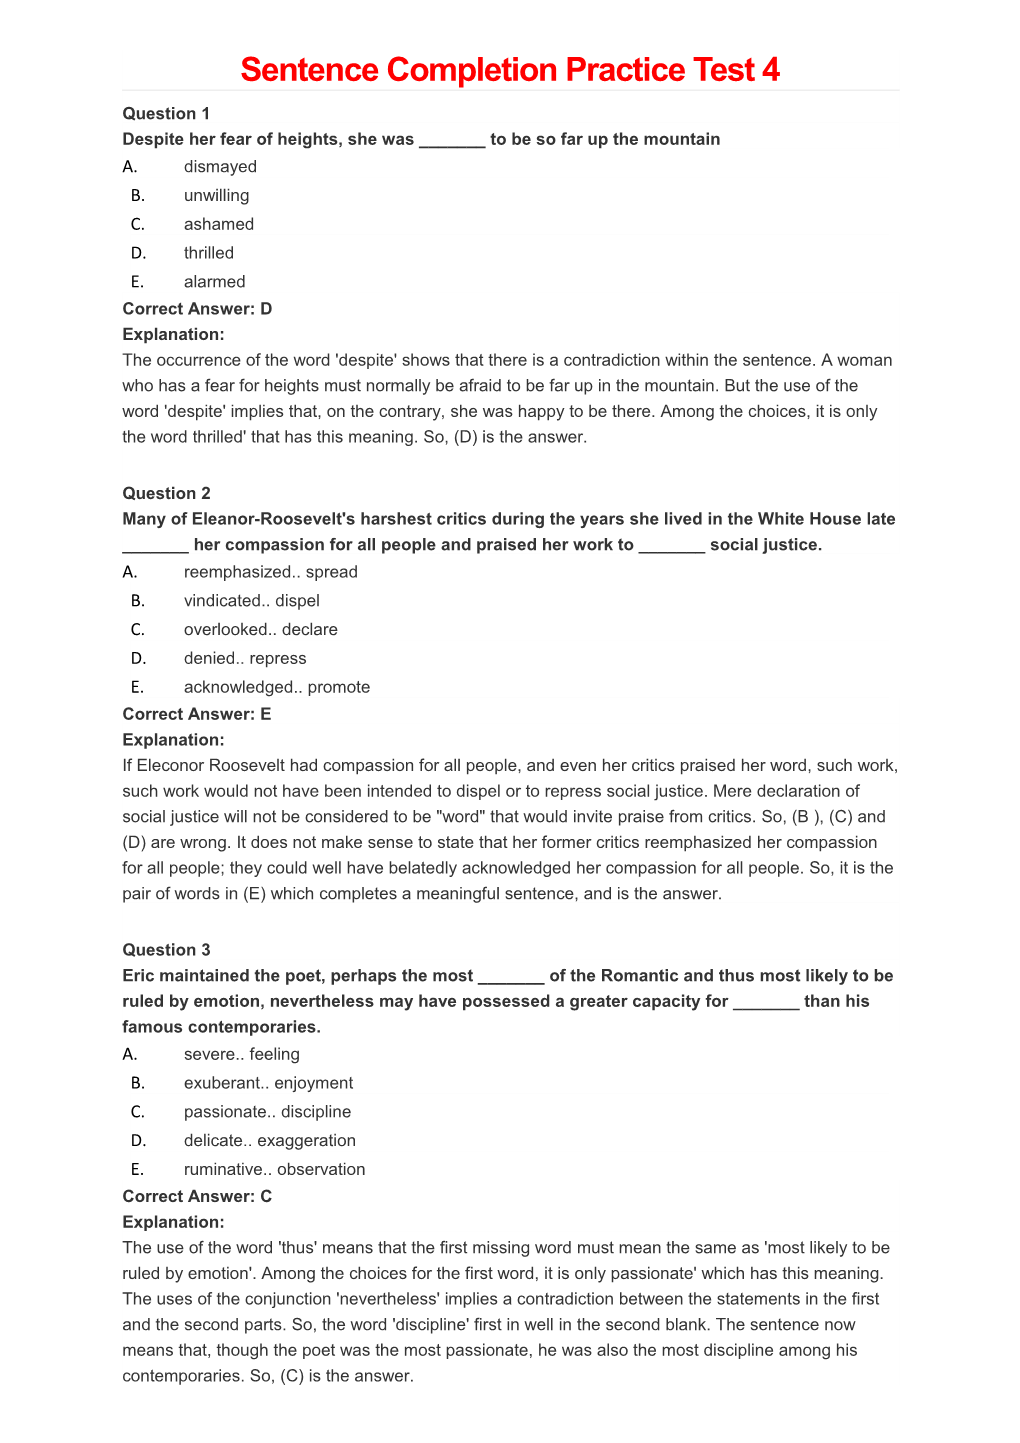 Sentence Completion Practice Test 4